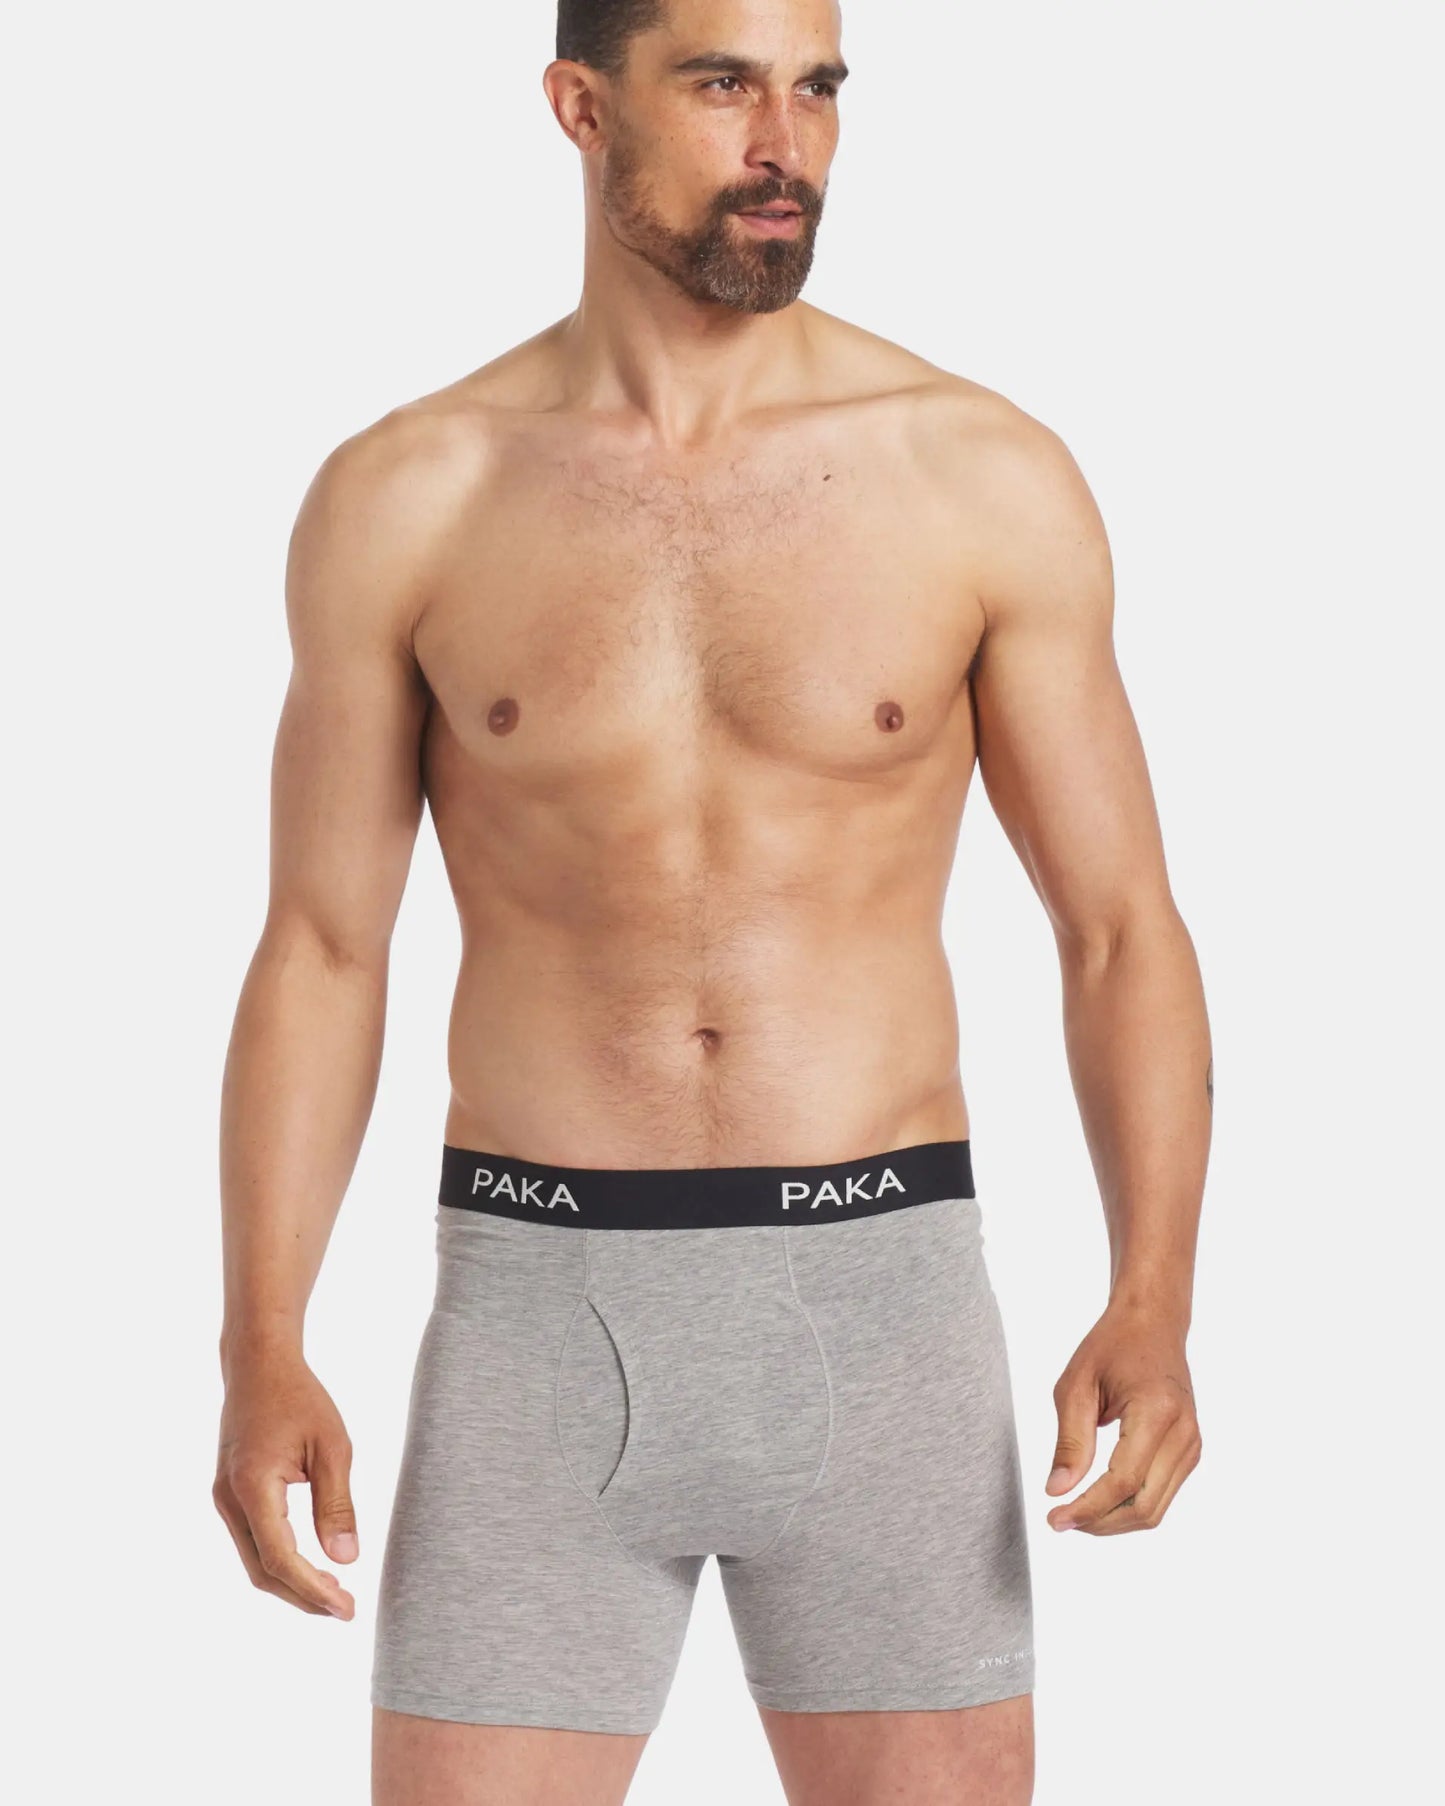 Men's grey alpaca briefs underwear on model